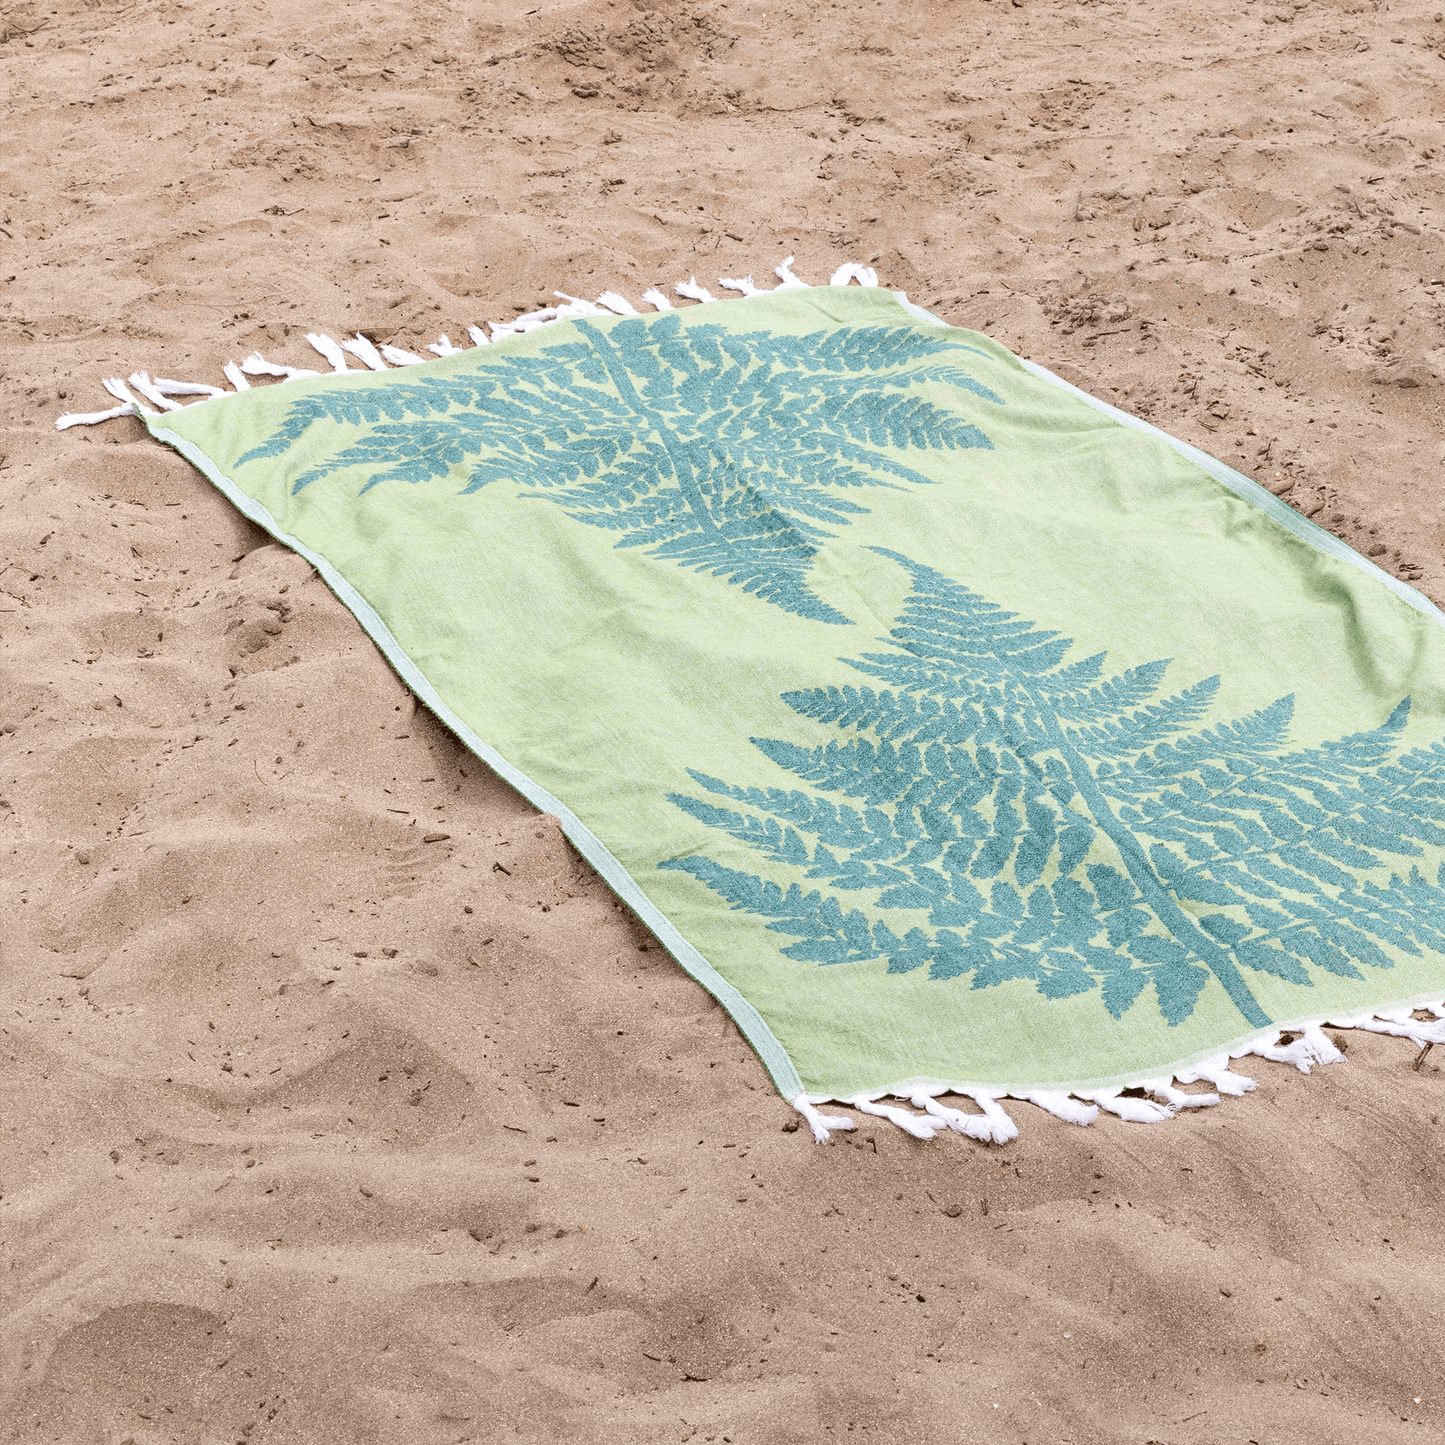 Green Turkish towel at the beach